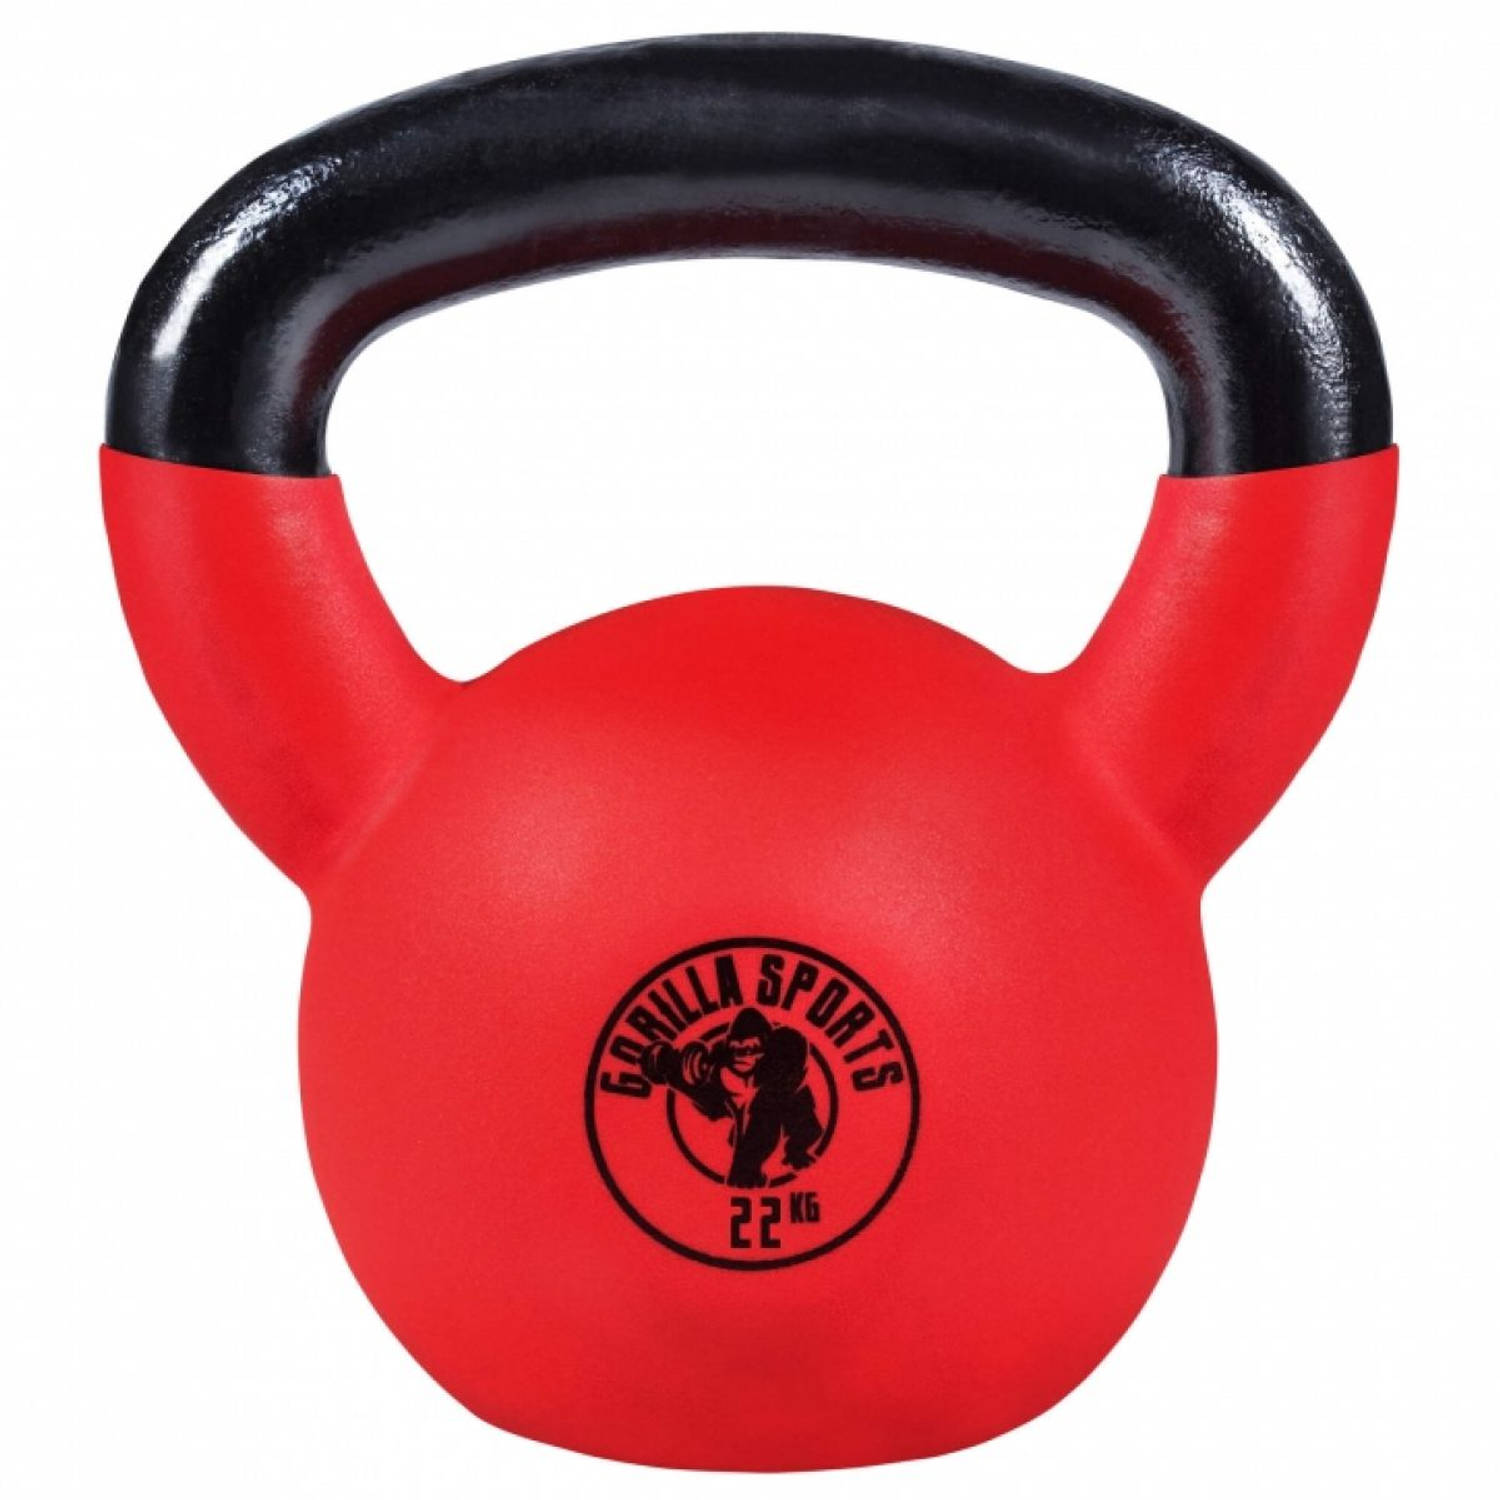 Gorilla Sports Kettlebell Gietijzer (rubber coating) 22 kg